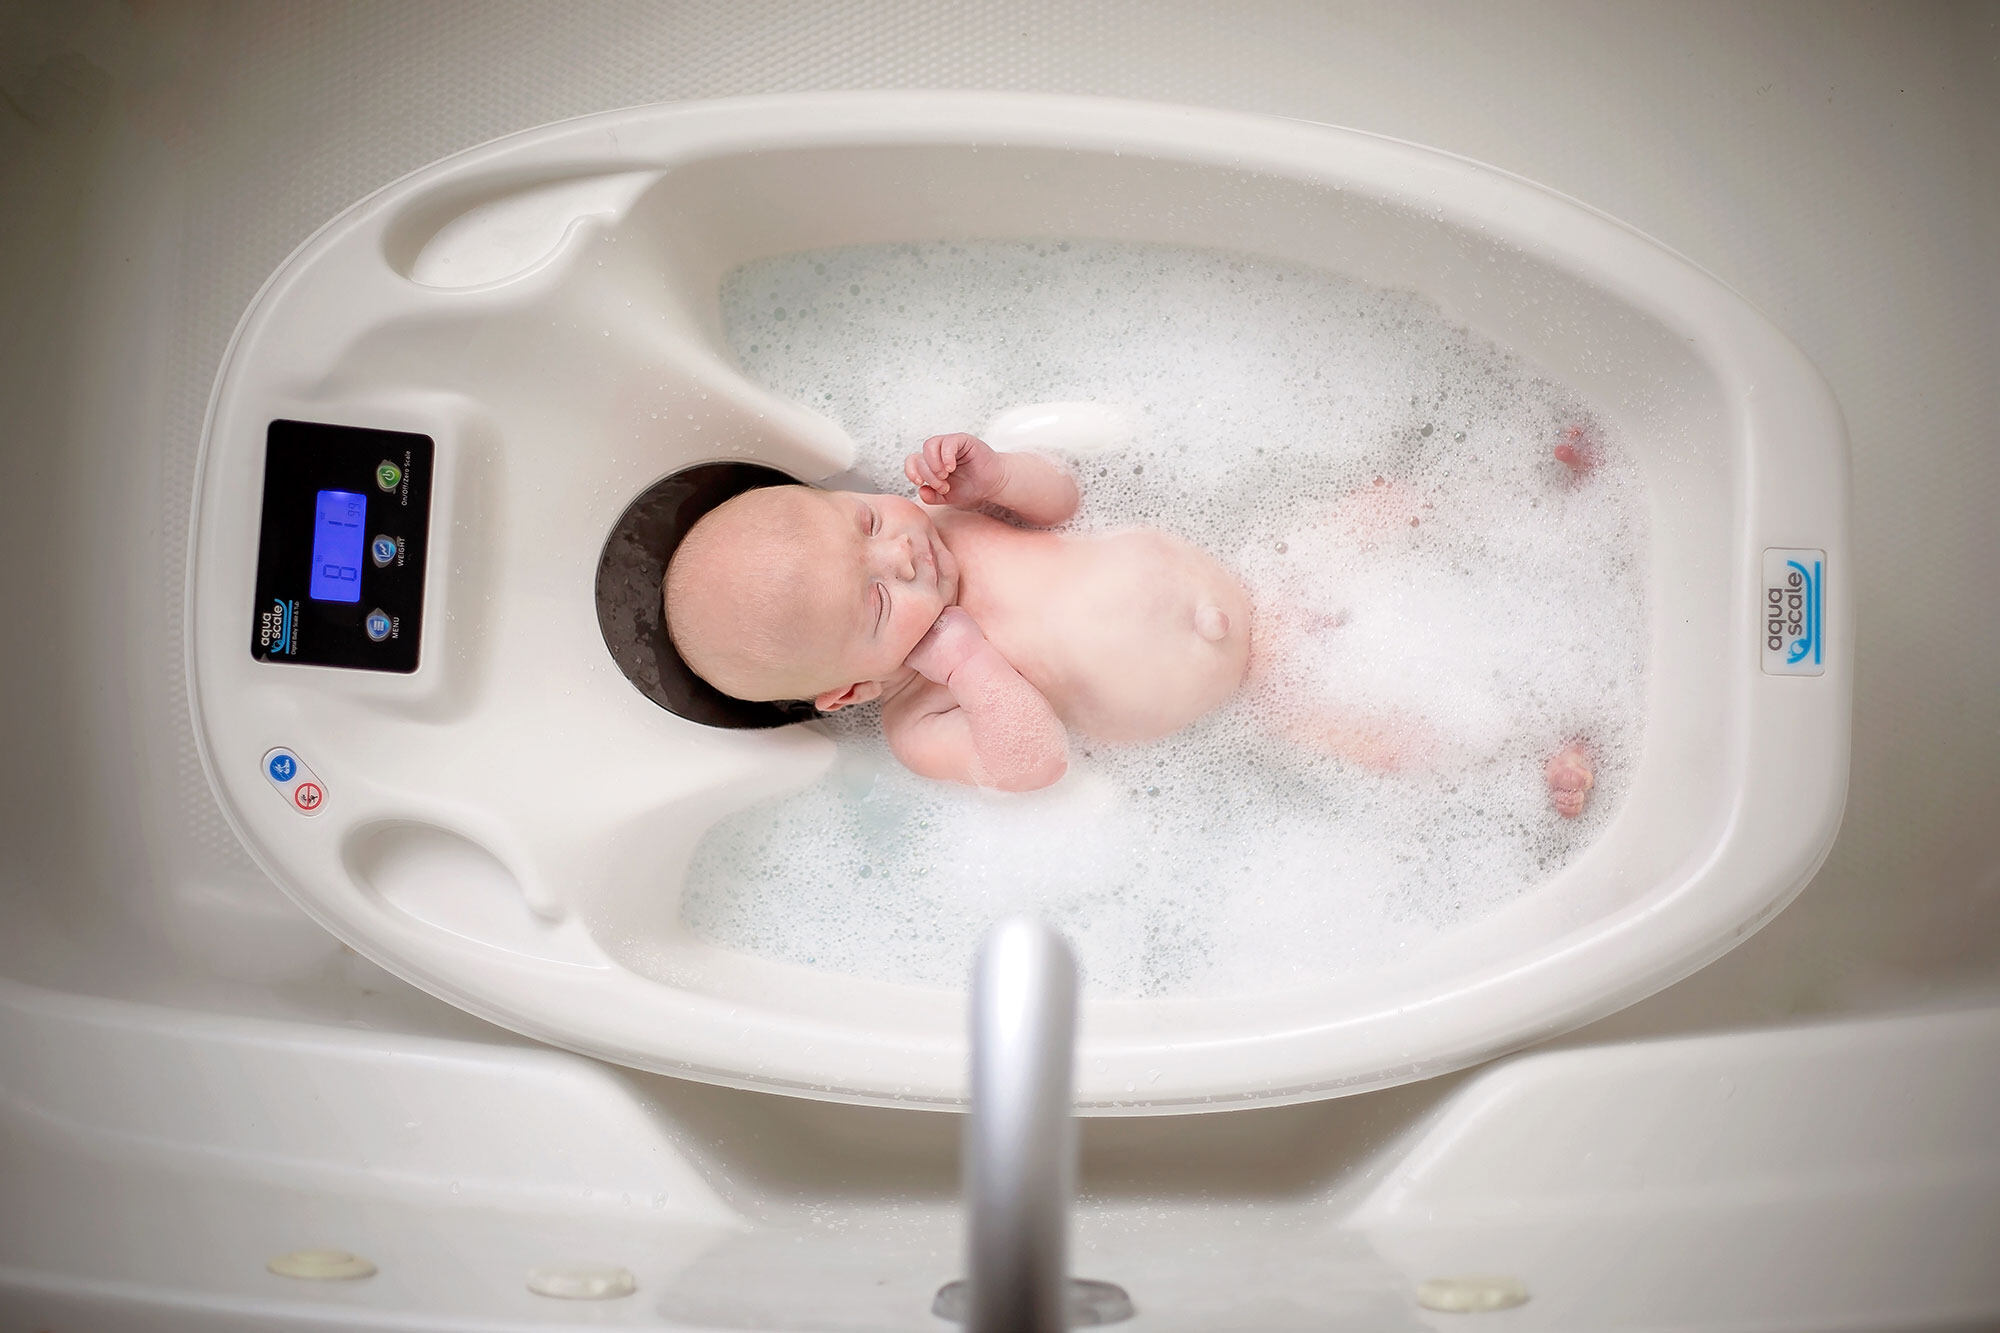 Babypatent Aquascale Bath Tub Lazada, Aqua Scale 3 In 1 Infant Bathtub